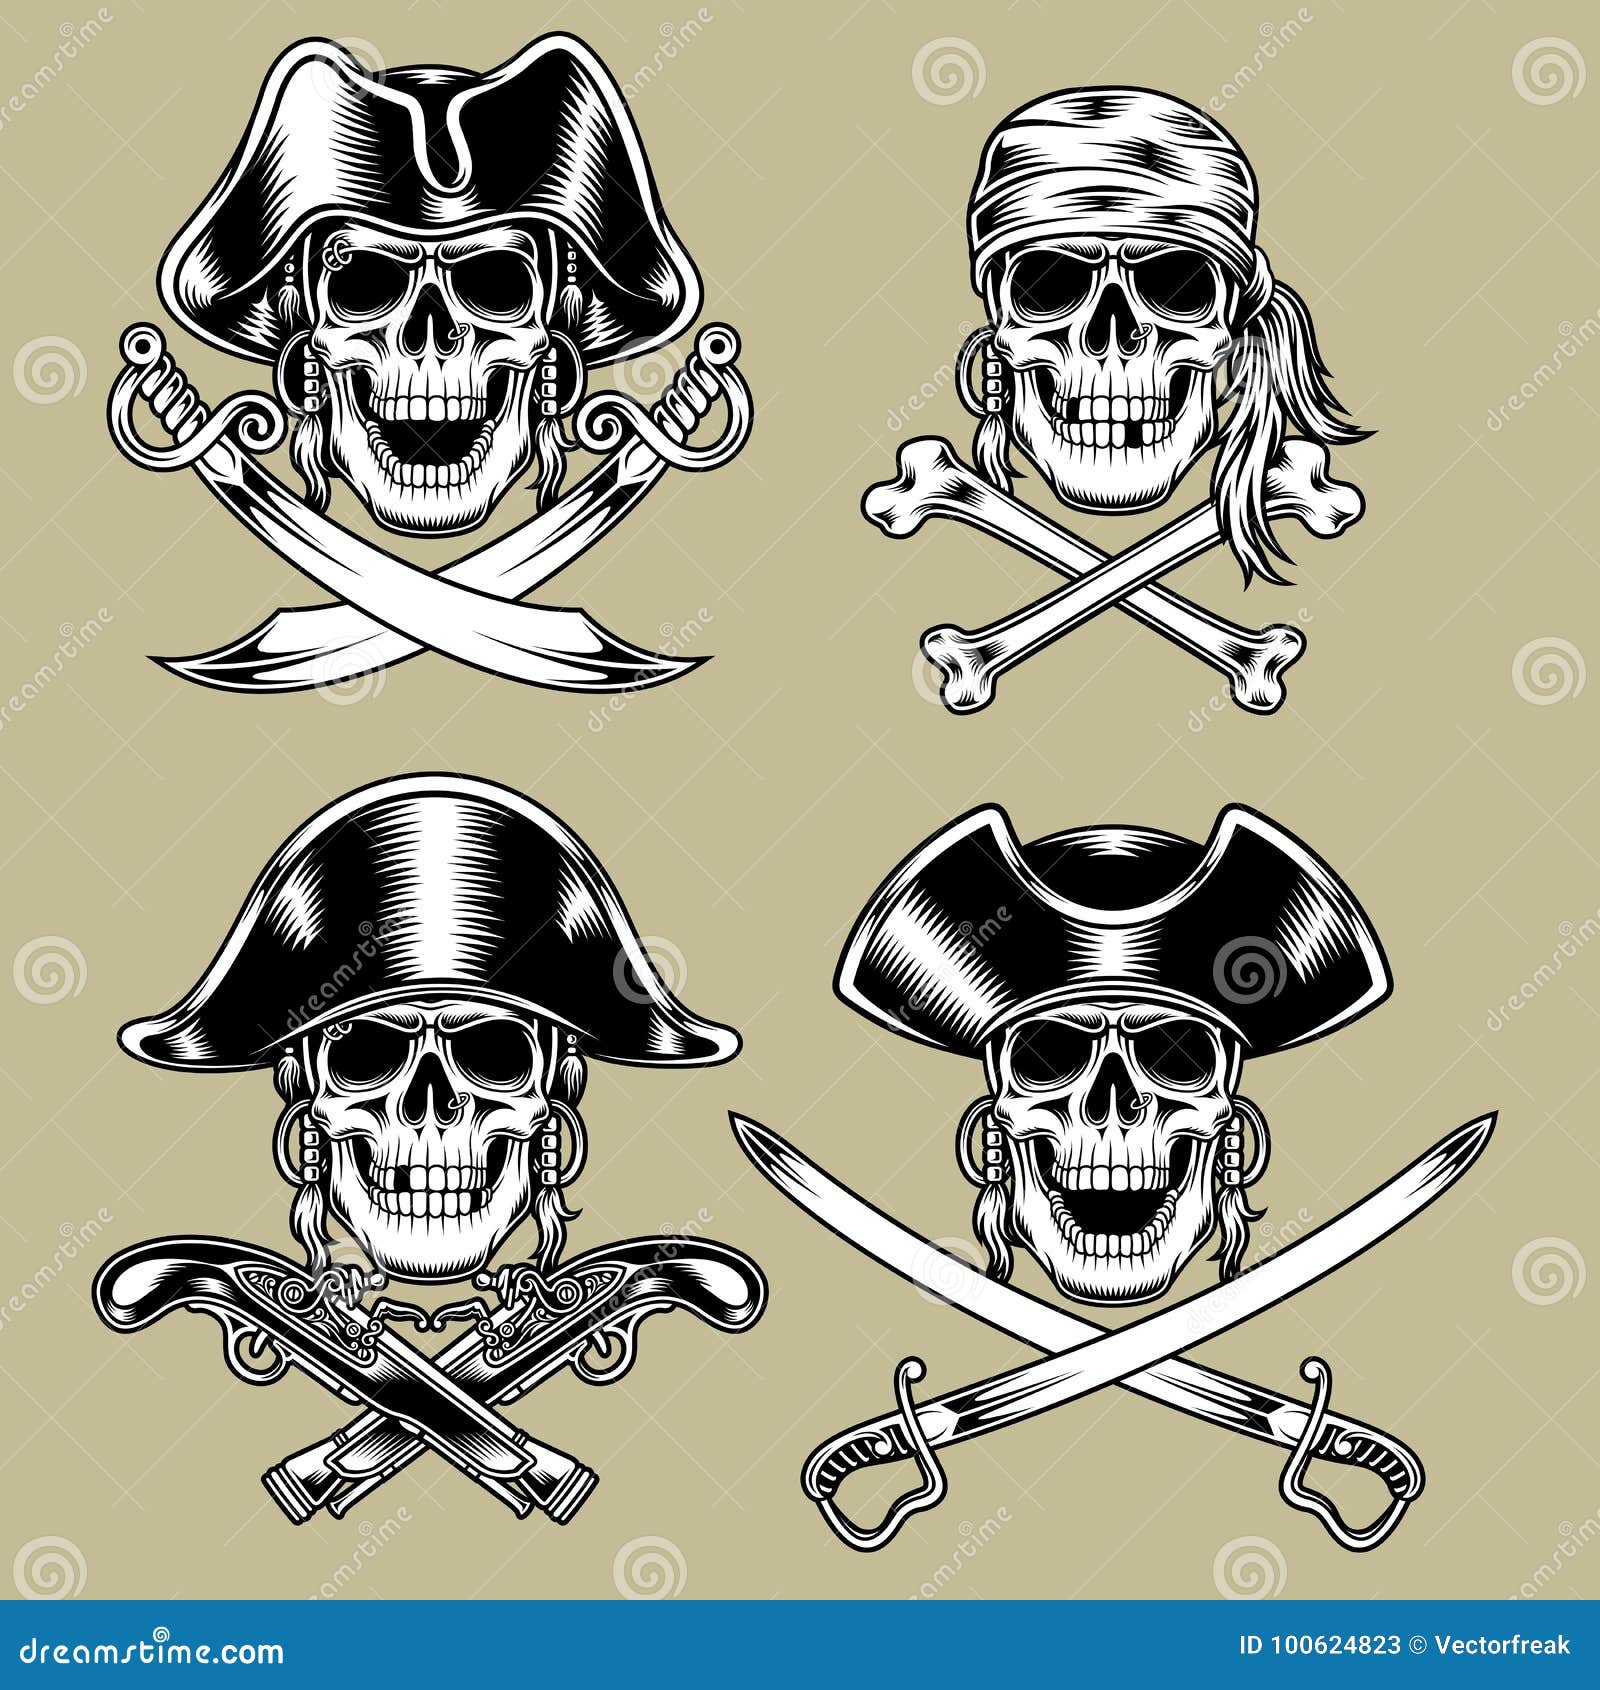 Pirate Skull And Crossbones Tattoo by saracaturani  Tattoogridnet